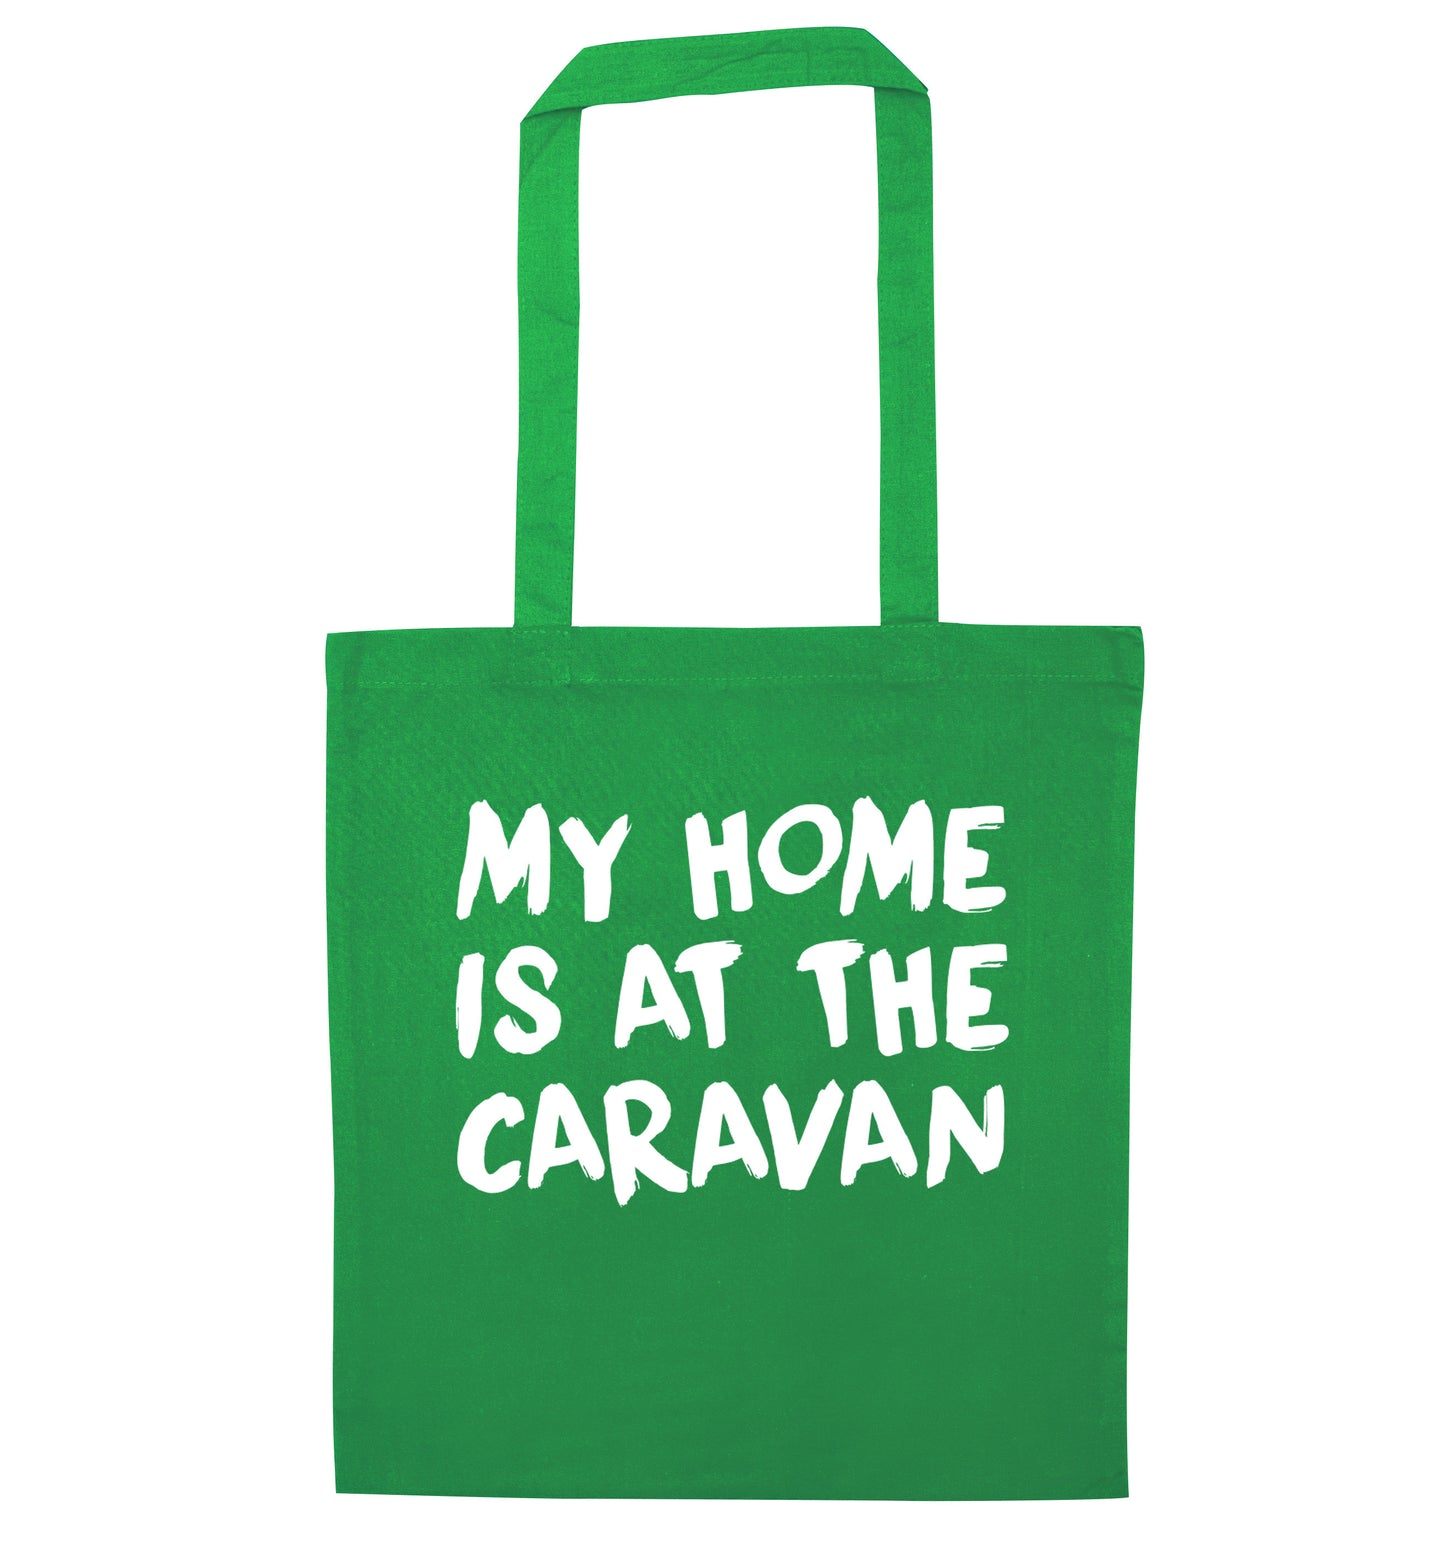 My home is at the caravan green tote bag